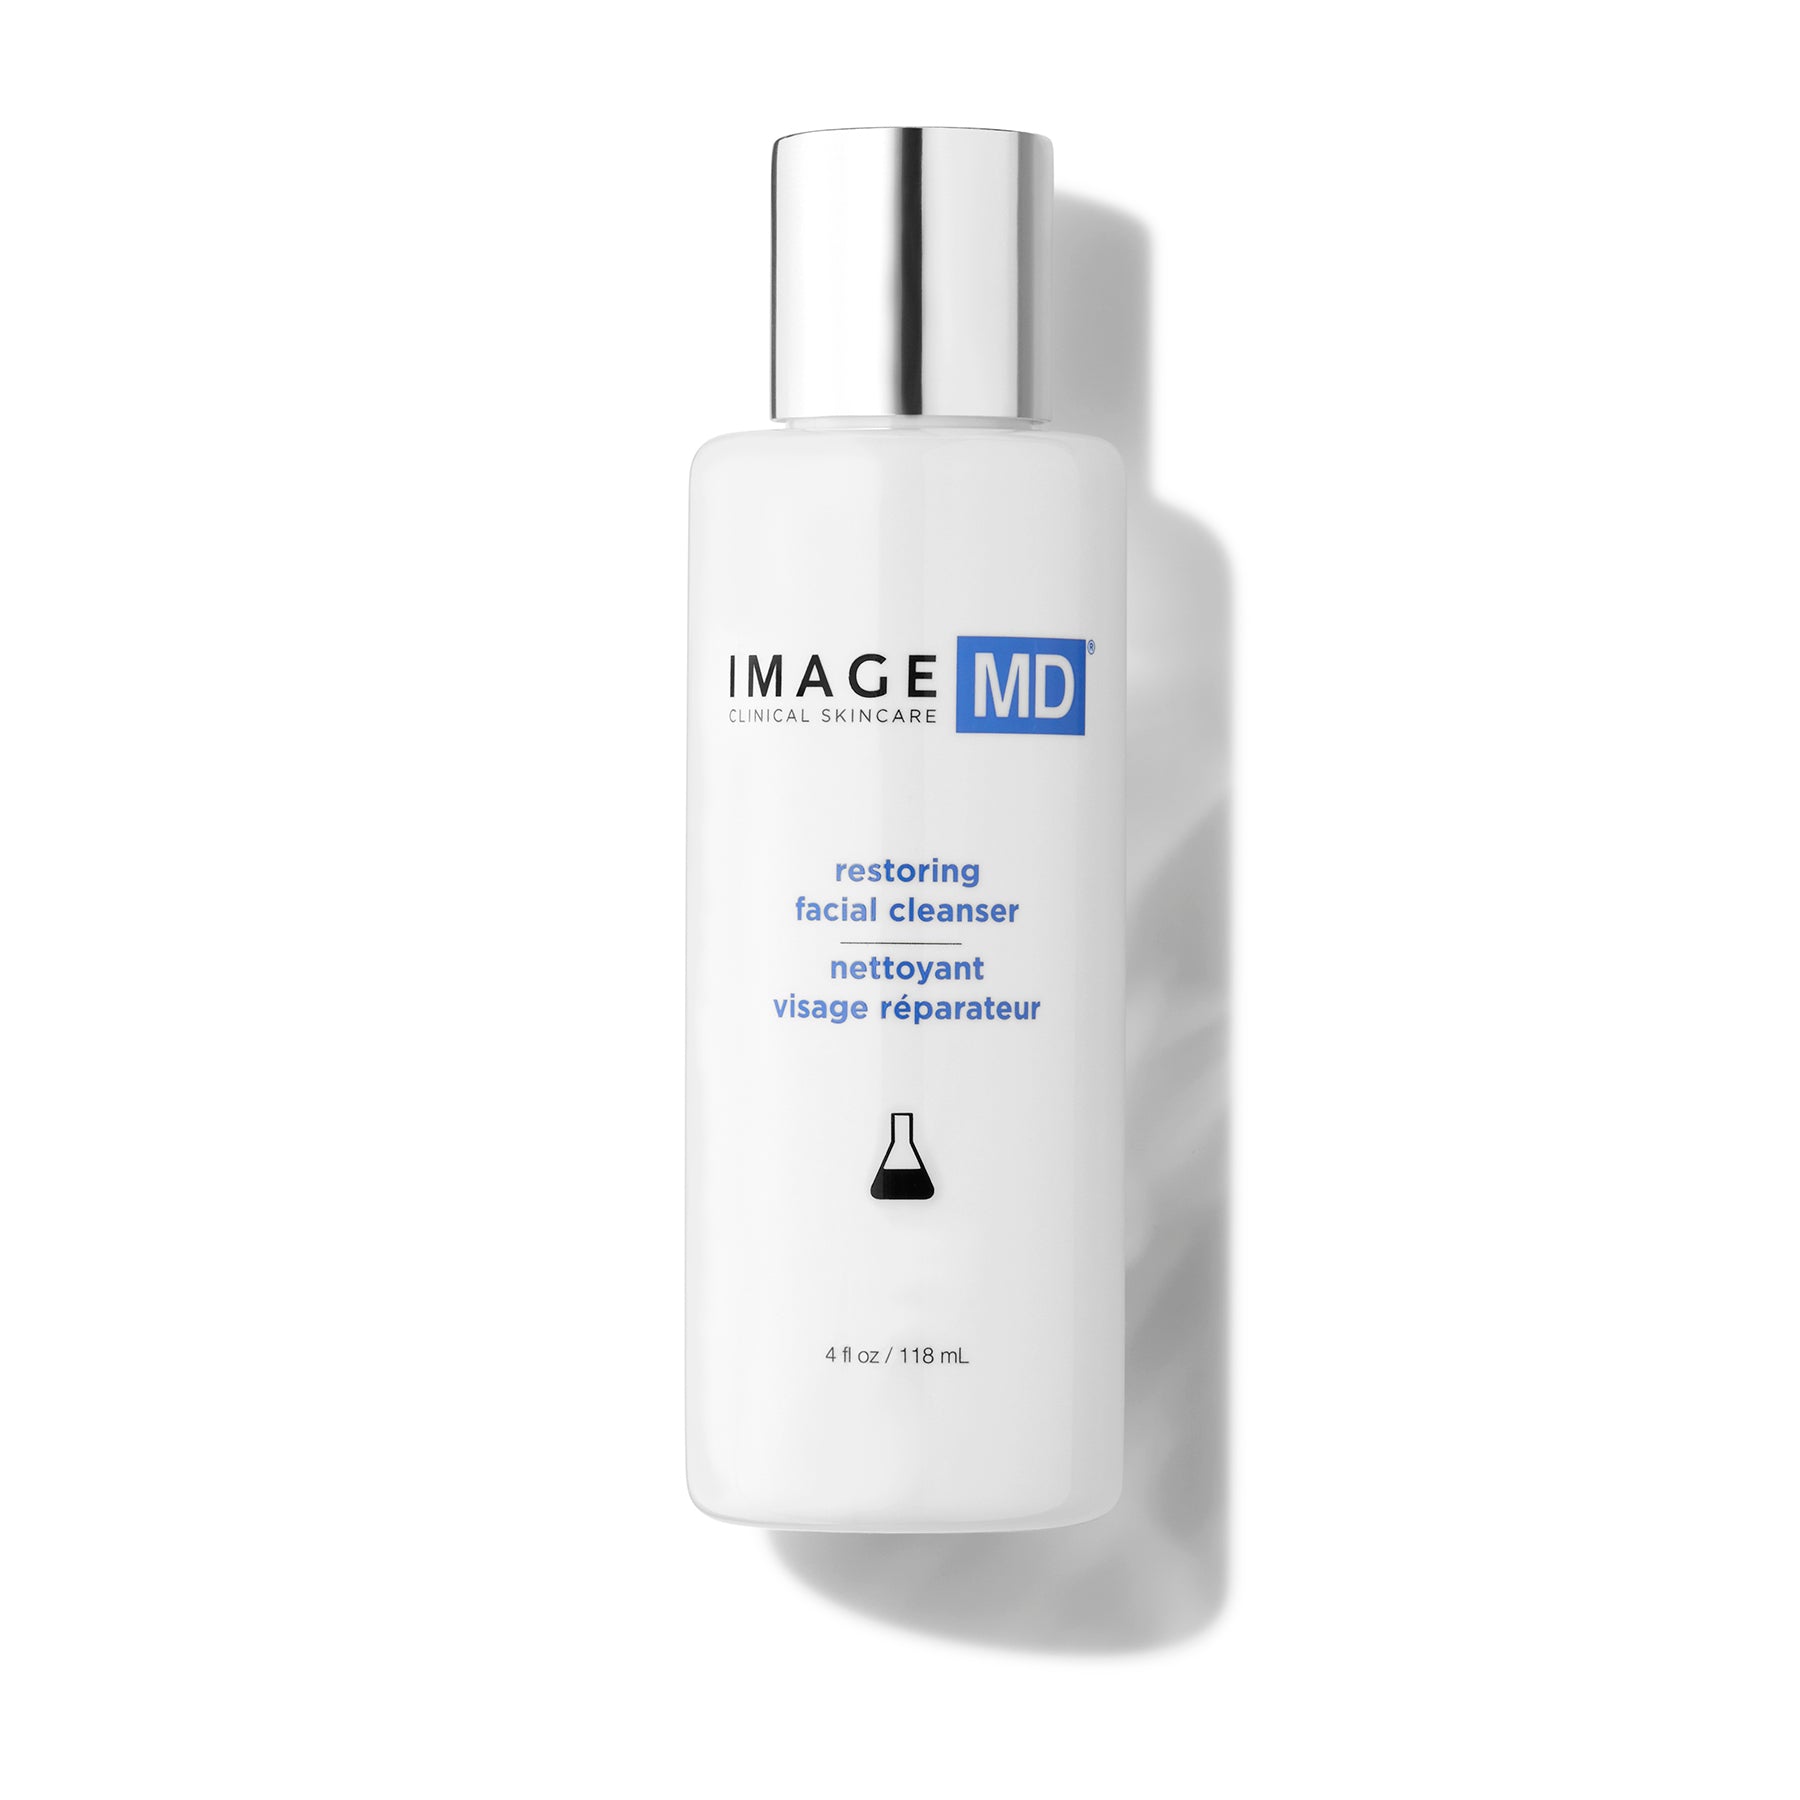 IMAGE MD® restoring facial cleanser